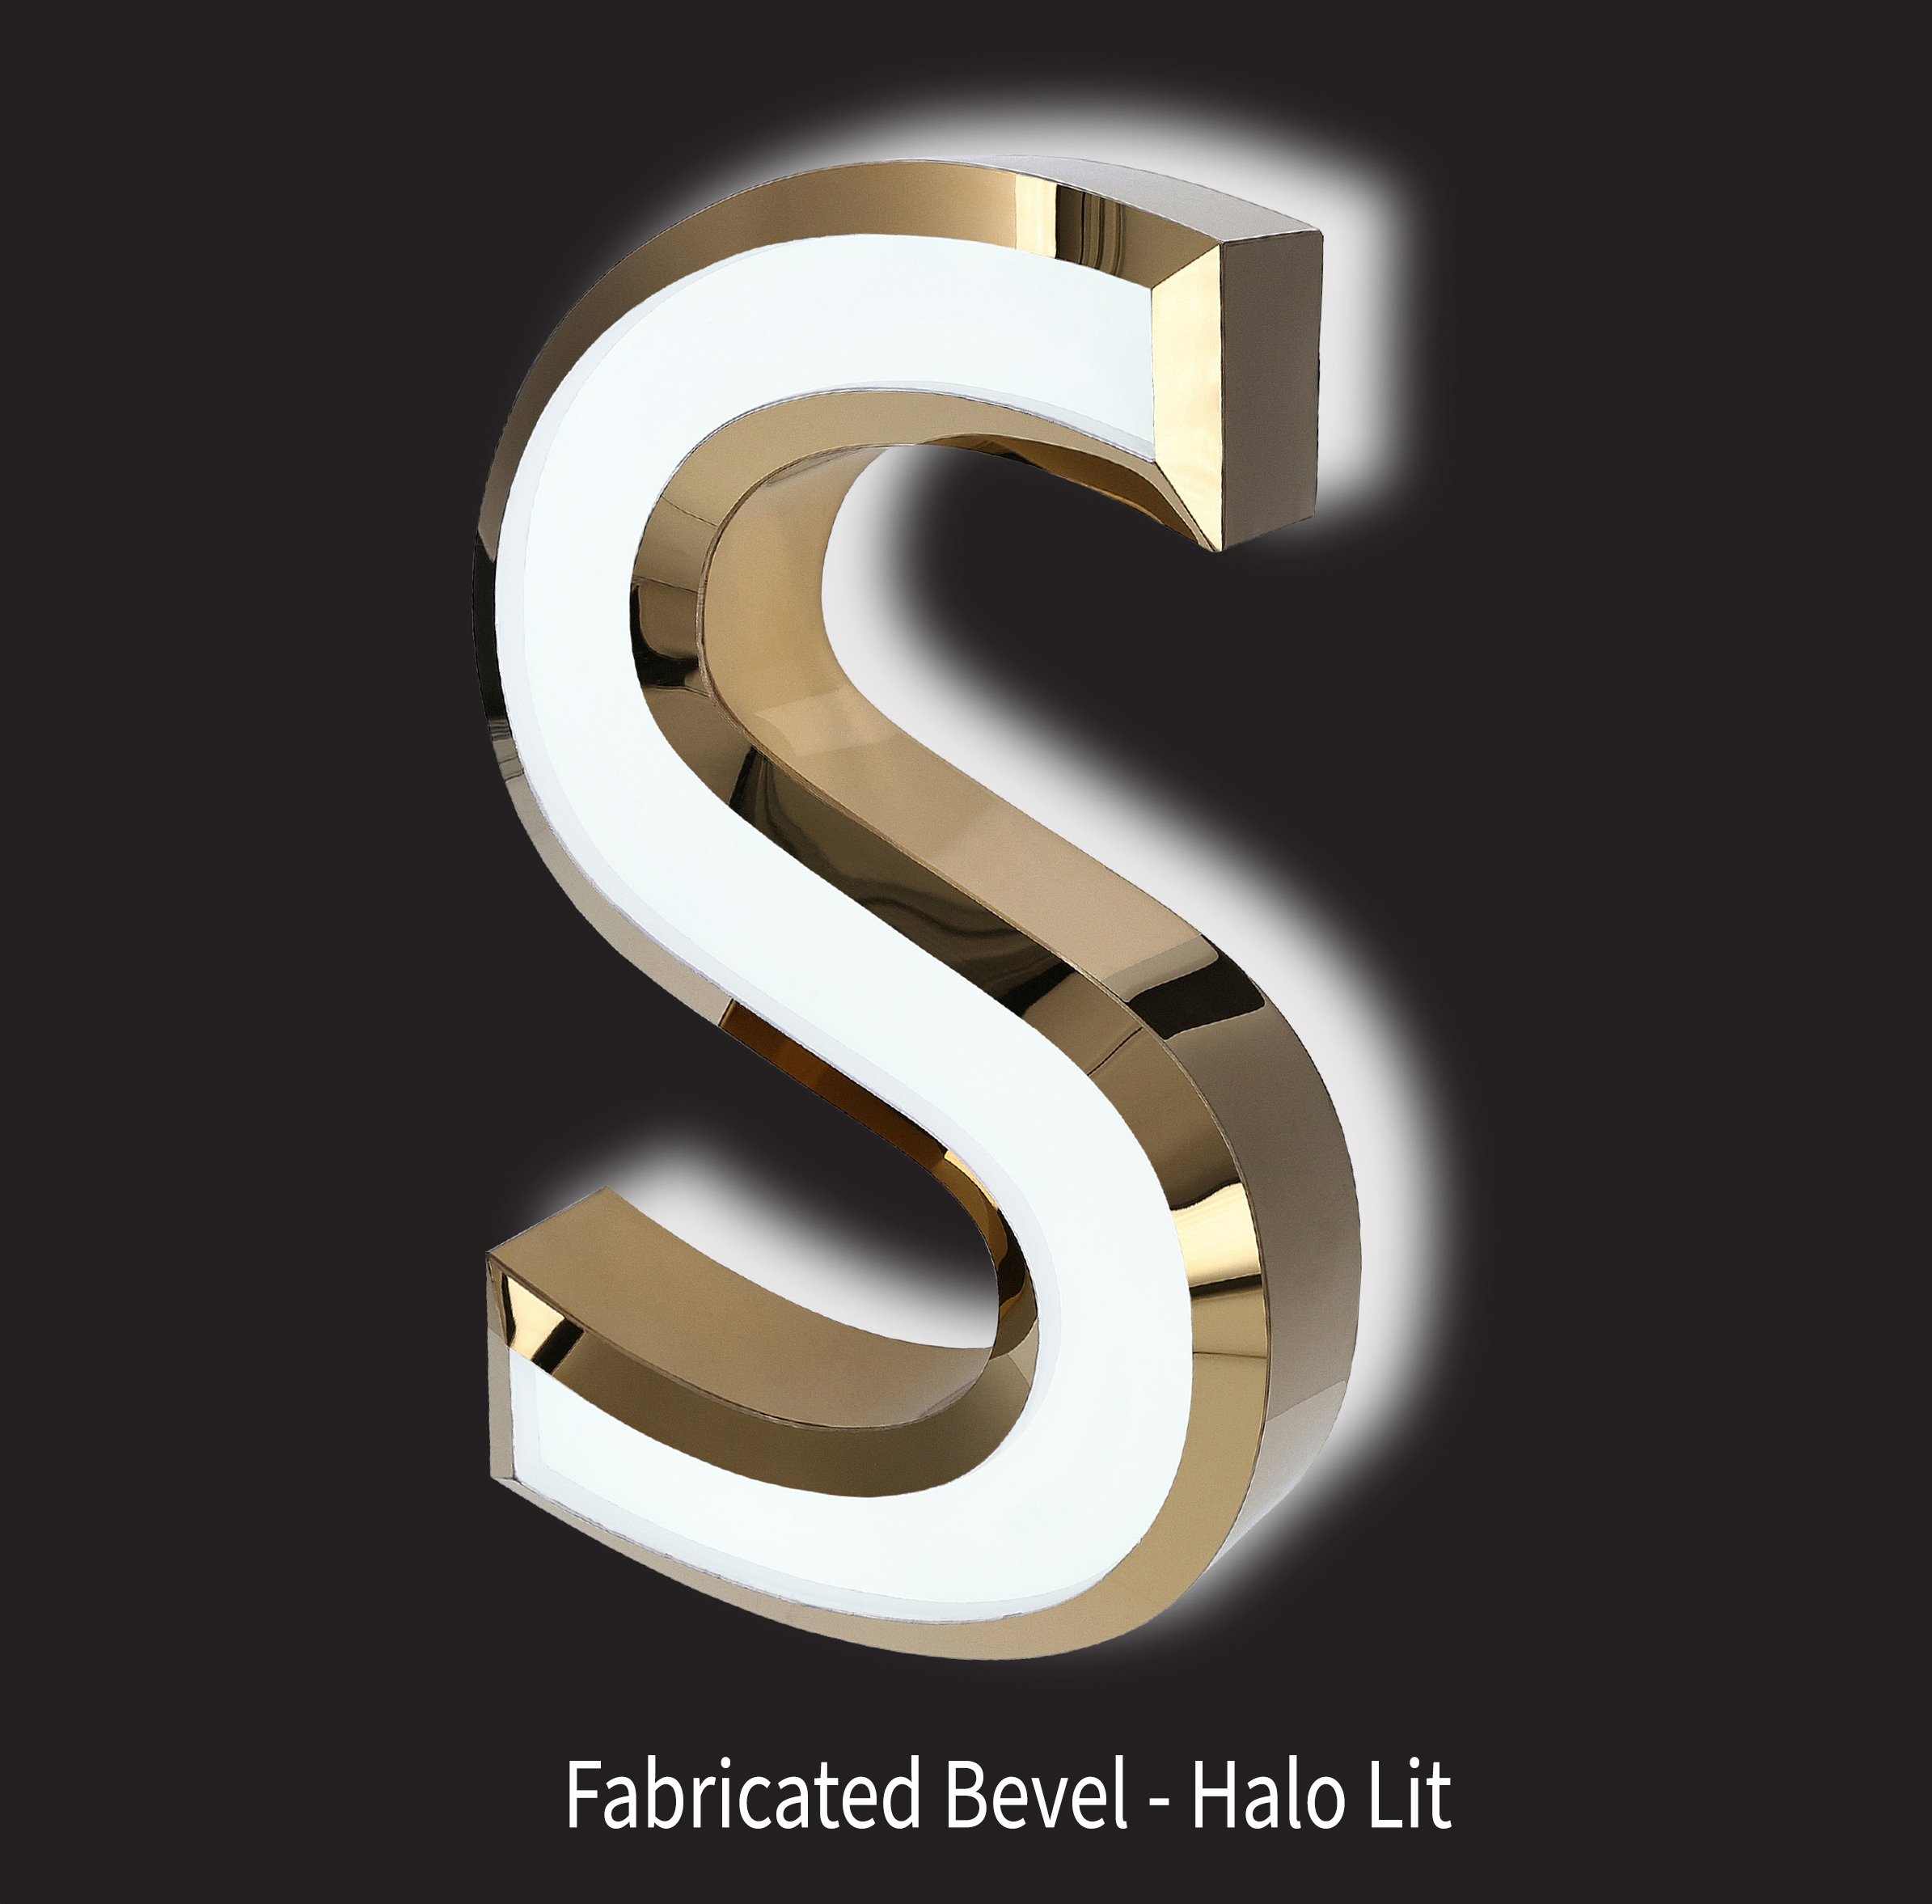 Illuminated_FAB_Bevel_Face-Halo_Lit_WORDS.jpg